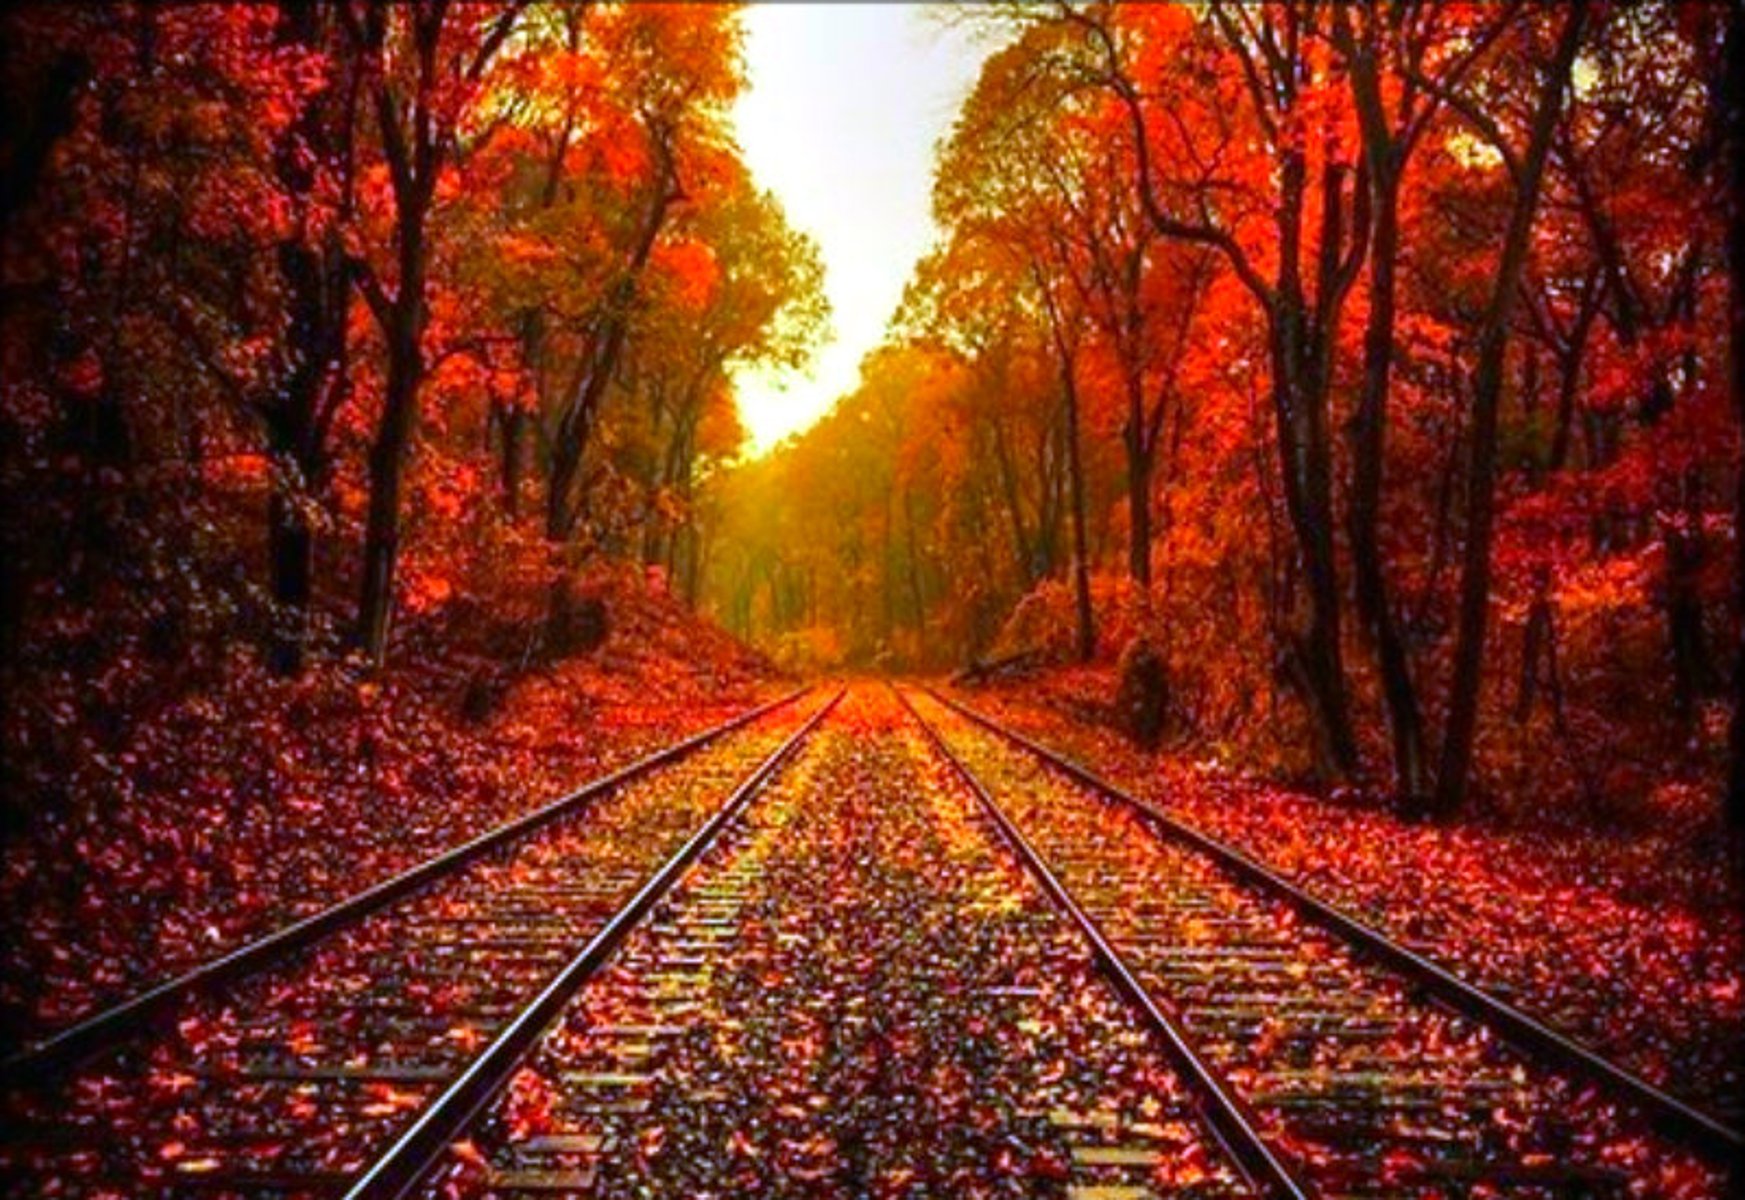 71+] Beautiful Autumn Wallpapers - WallpaperSafari